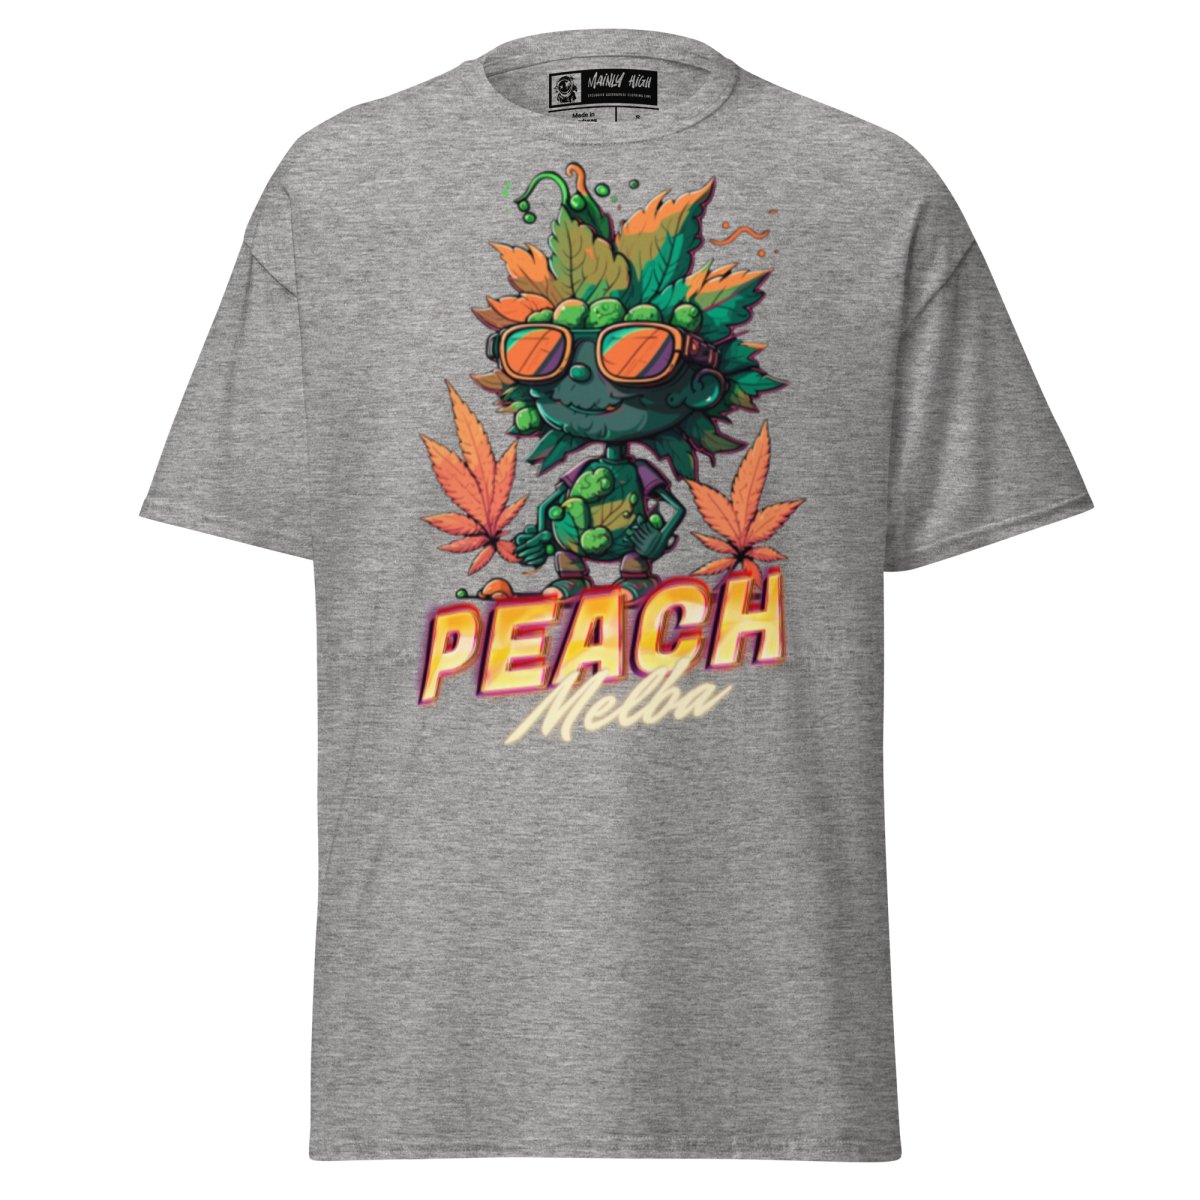 Peach Melba T-Shirt - Mainly High